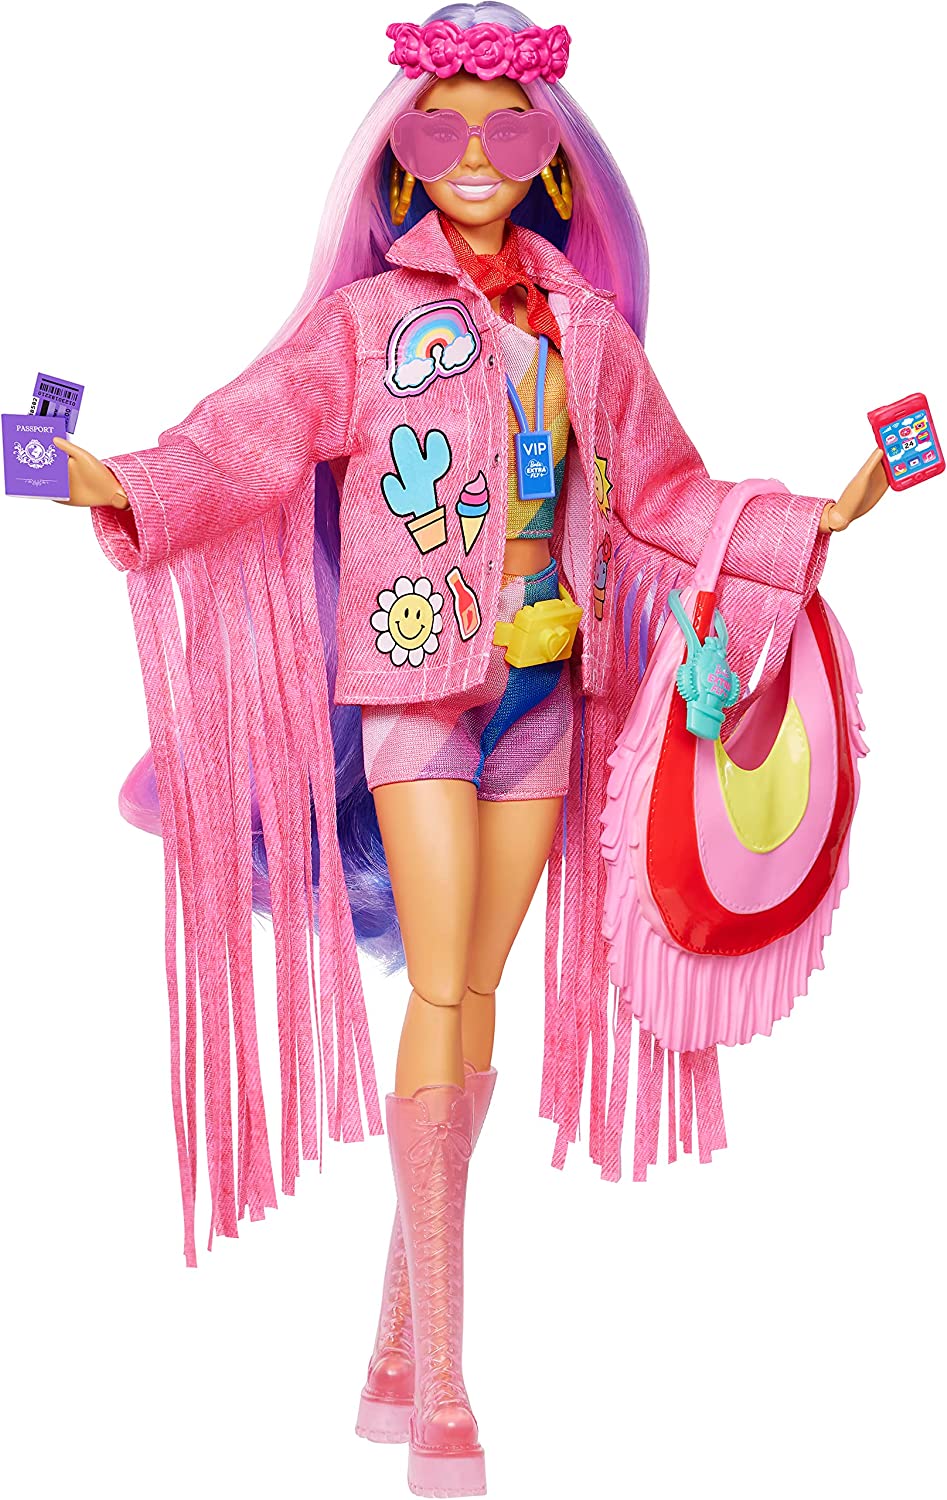 Barbie Extra Mini Minis Travel Doll with Safari Animal Print Fashion,  Barbie Extra Fly